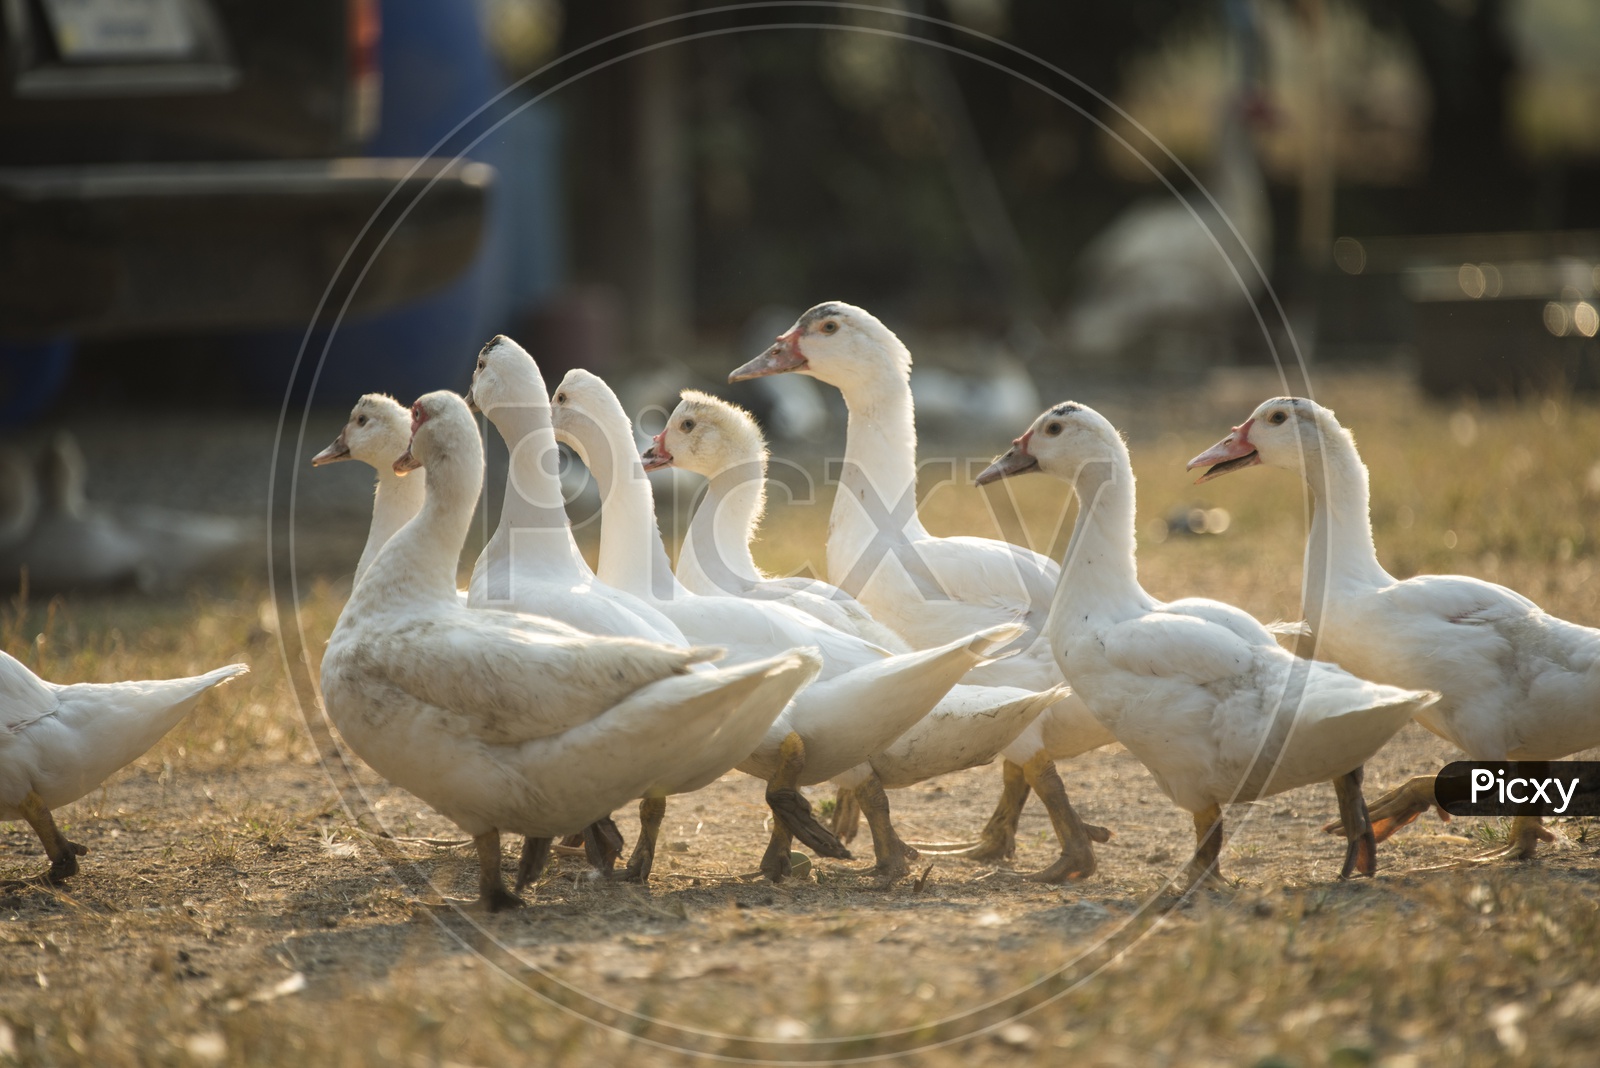 A group of ducks in farm, Thailand